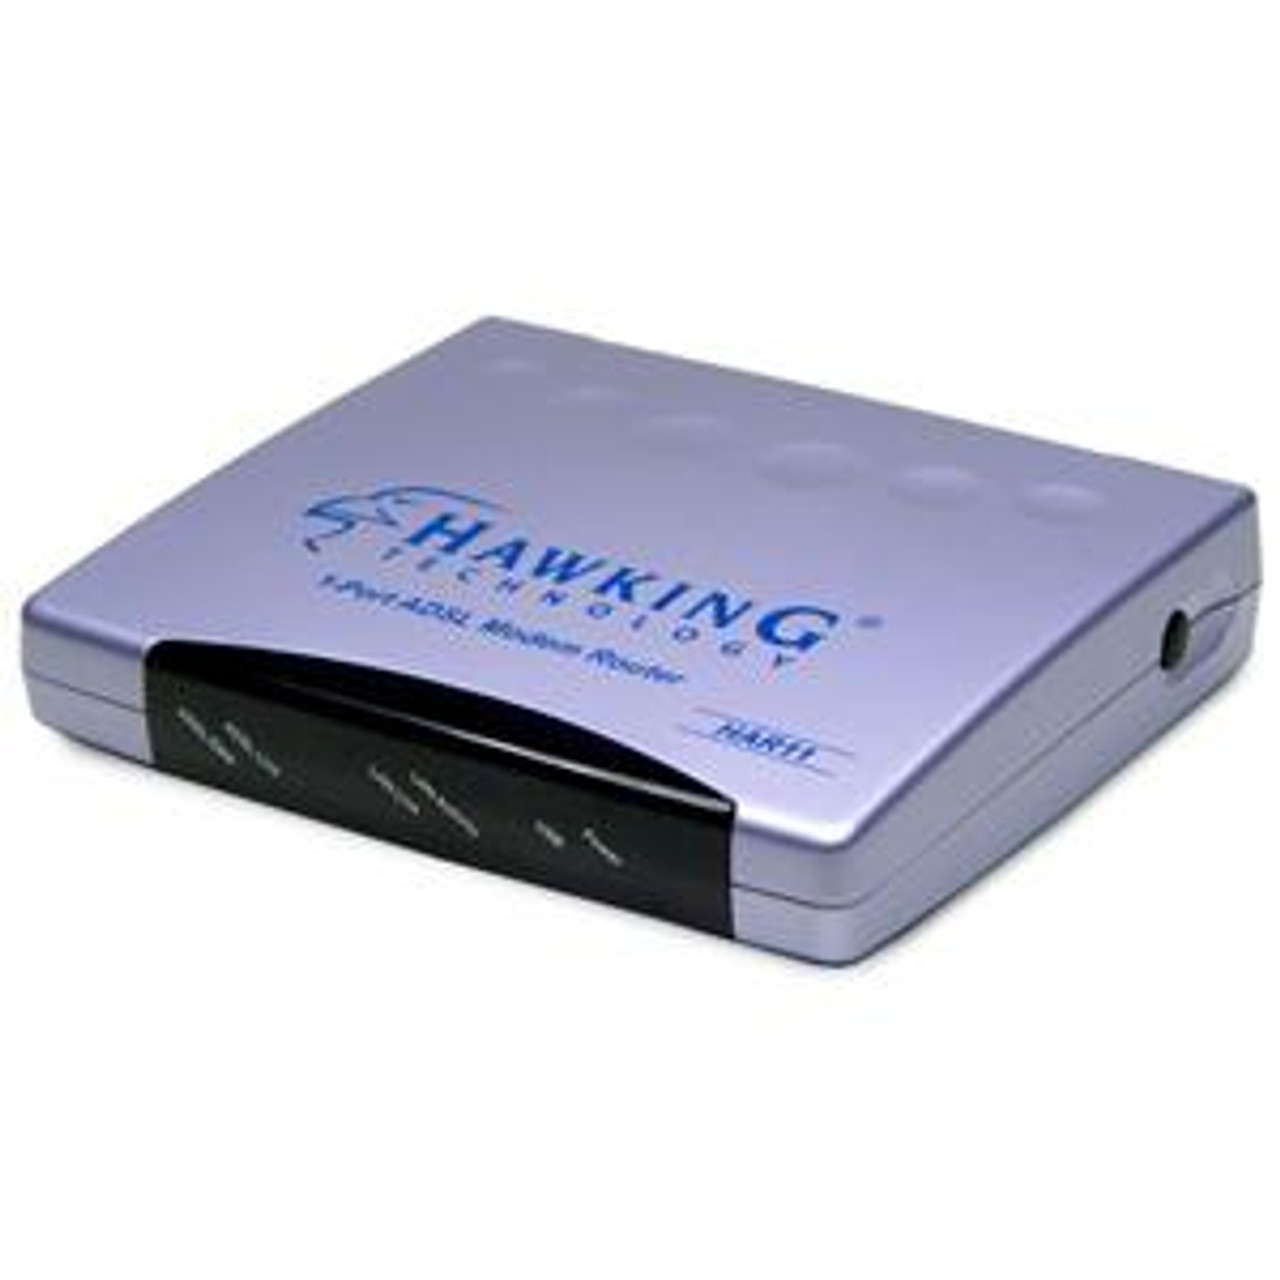 HAR11A Hawking HAR11 Broadband Router 1 x 10/100Base-TX LAN, 1 x ADSL WAN, 1 x USB (Refurbished)